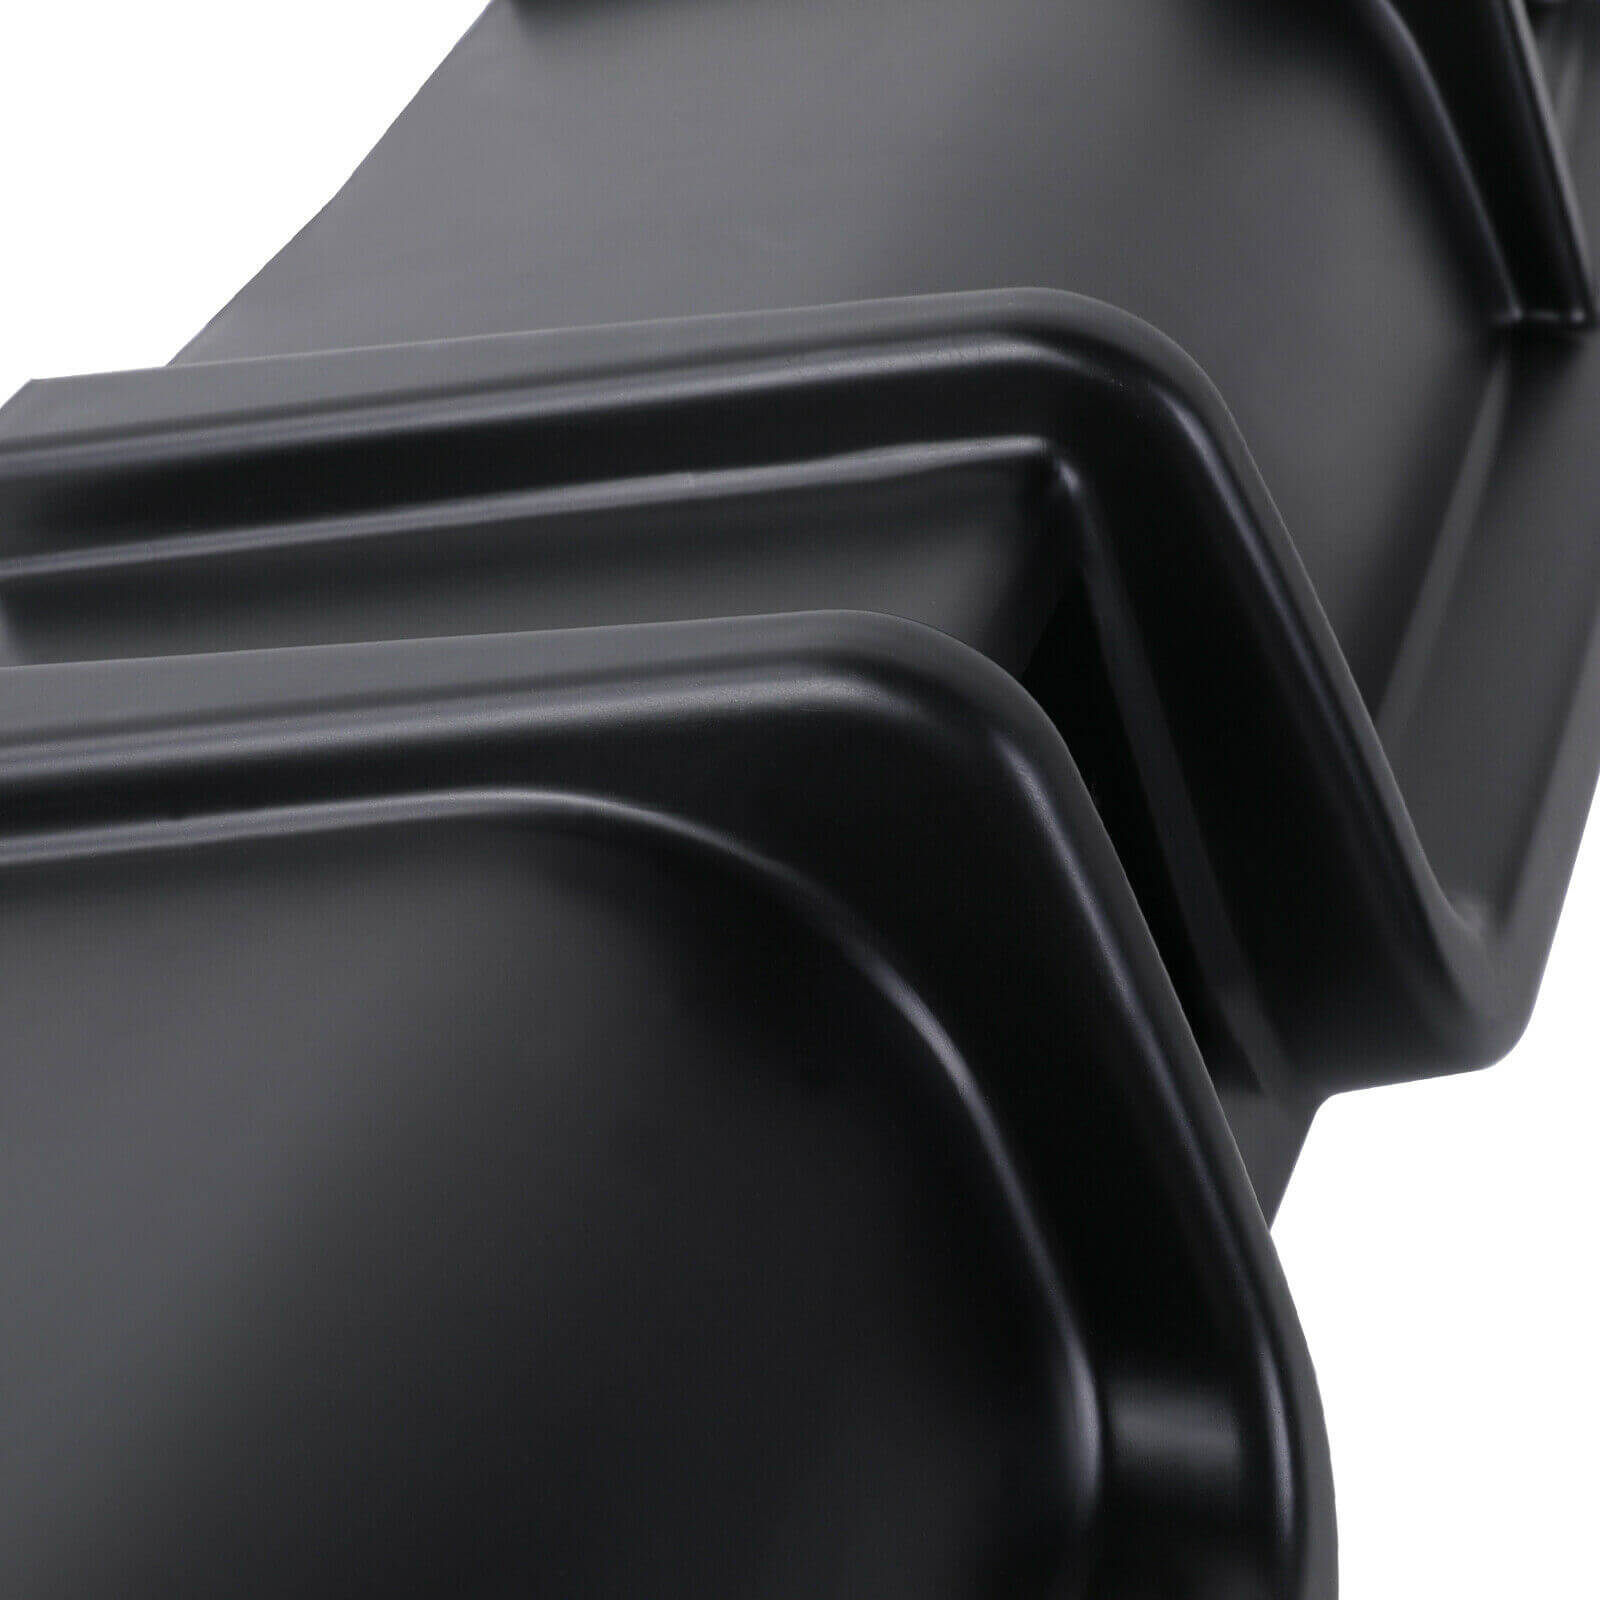 Details of matte black rear diffuser